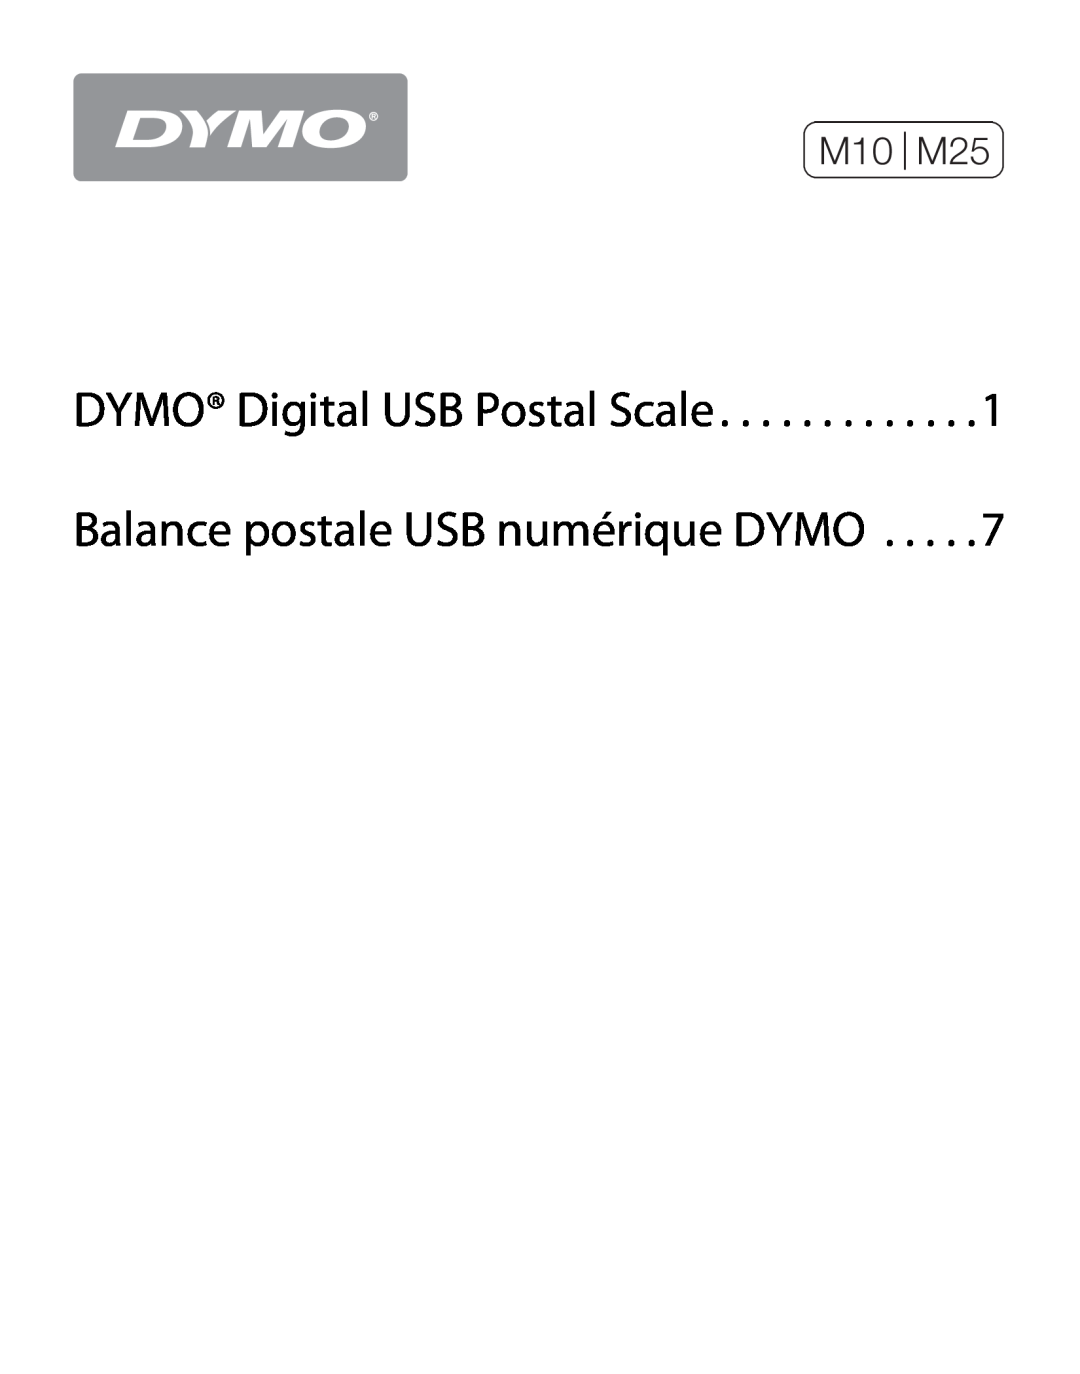 Dymo manual Balance postale USB numérique DYMO, DYMO Digital USB Postal Scale, M10 M25 